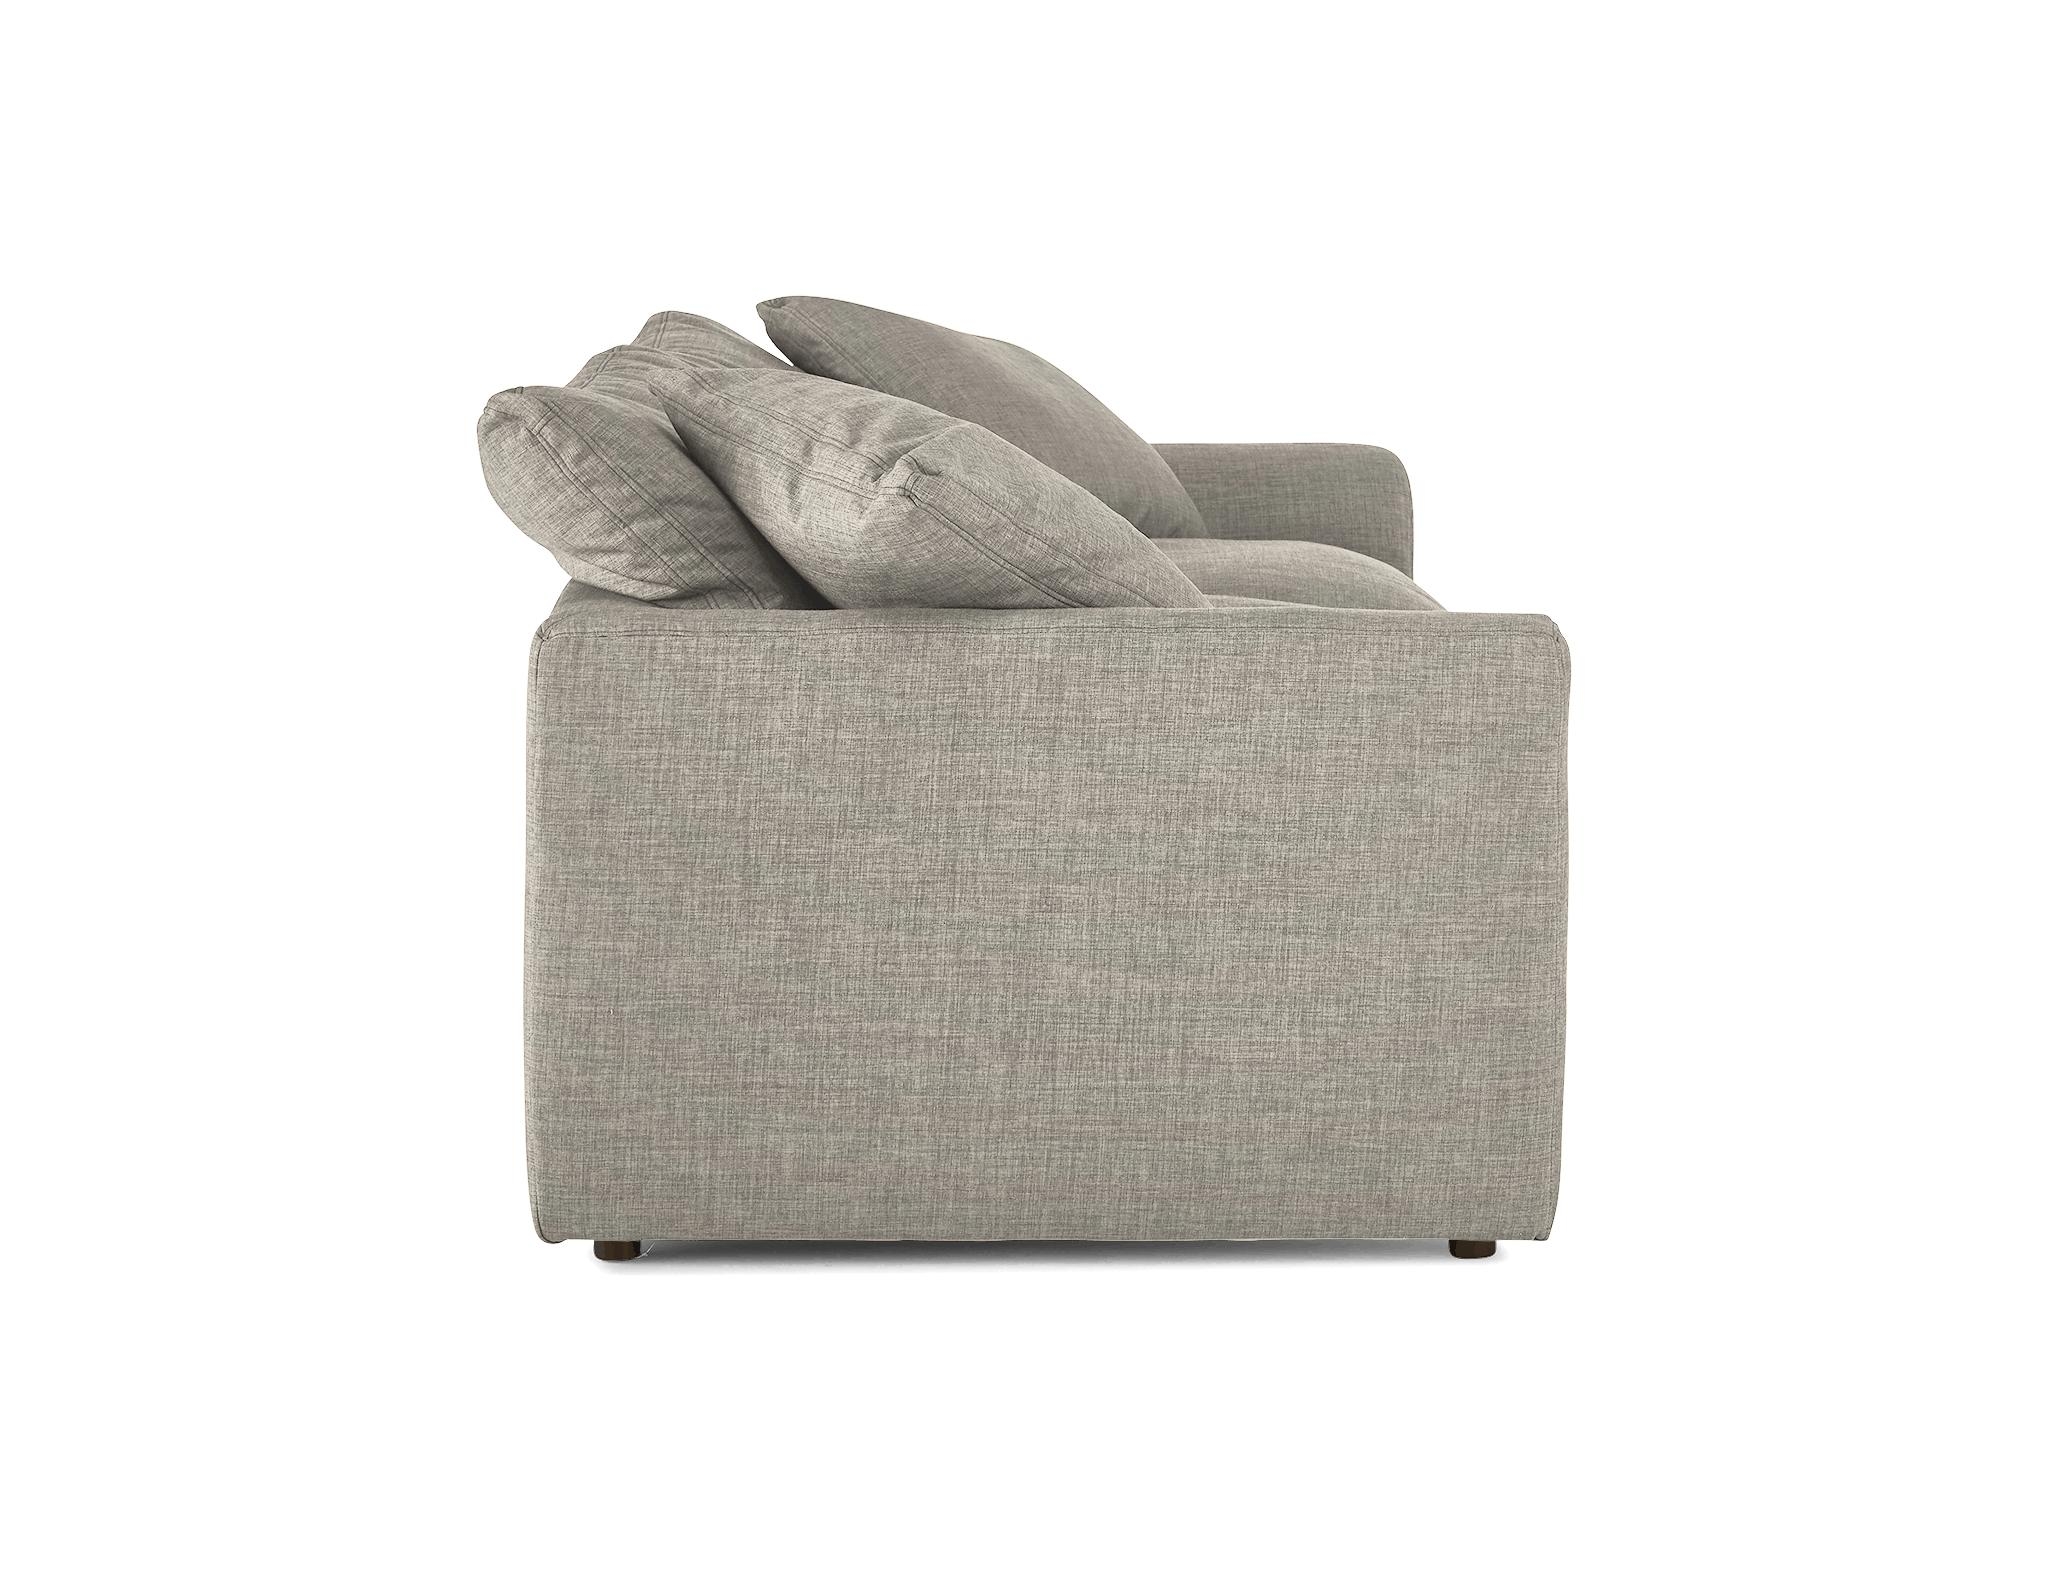 White Bryant Mid Century Modern Sofa - Bloke Cotton - Image 2